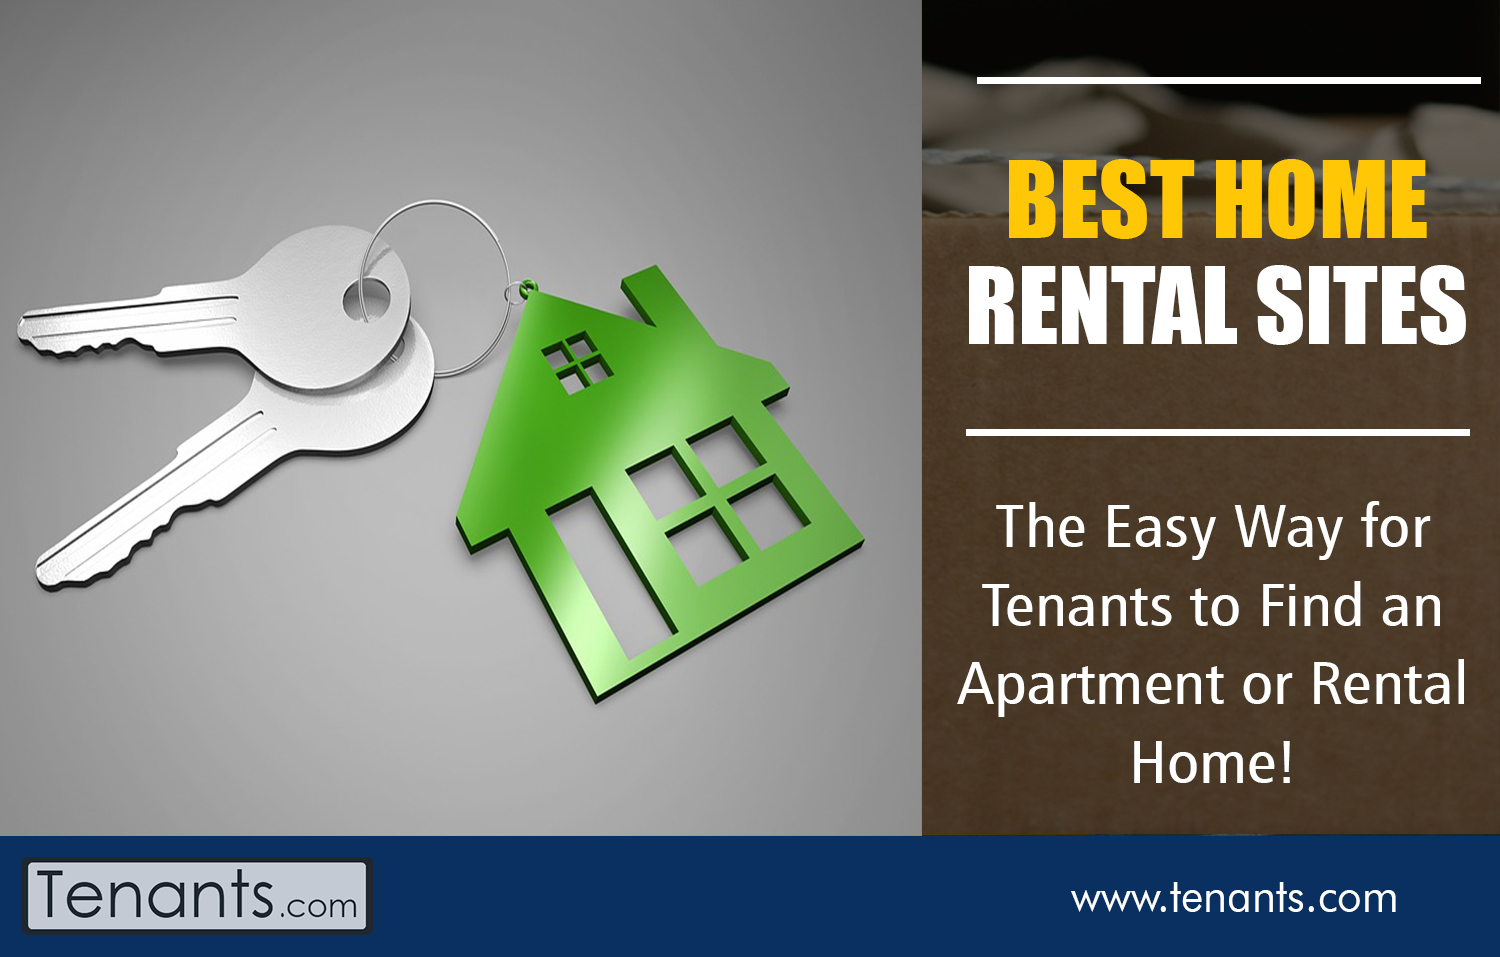 The best home com. Sites for Rental. Rent Home Translate. Apartment Rental Agreement Denmark. Rental Assets.